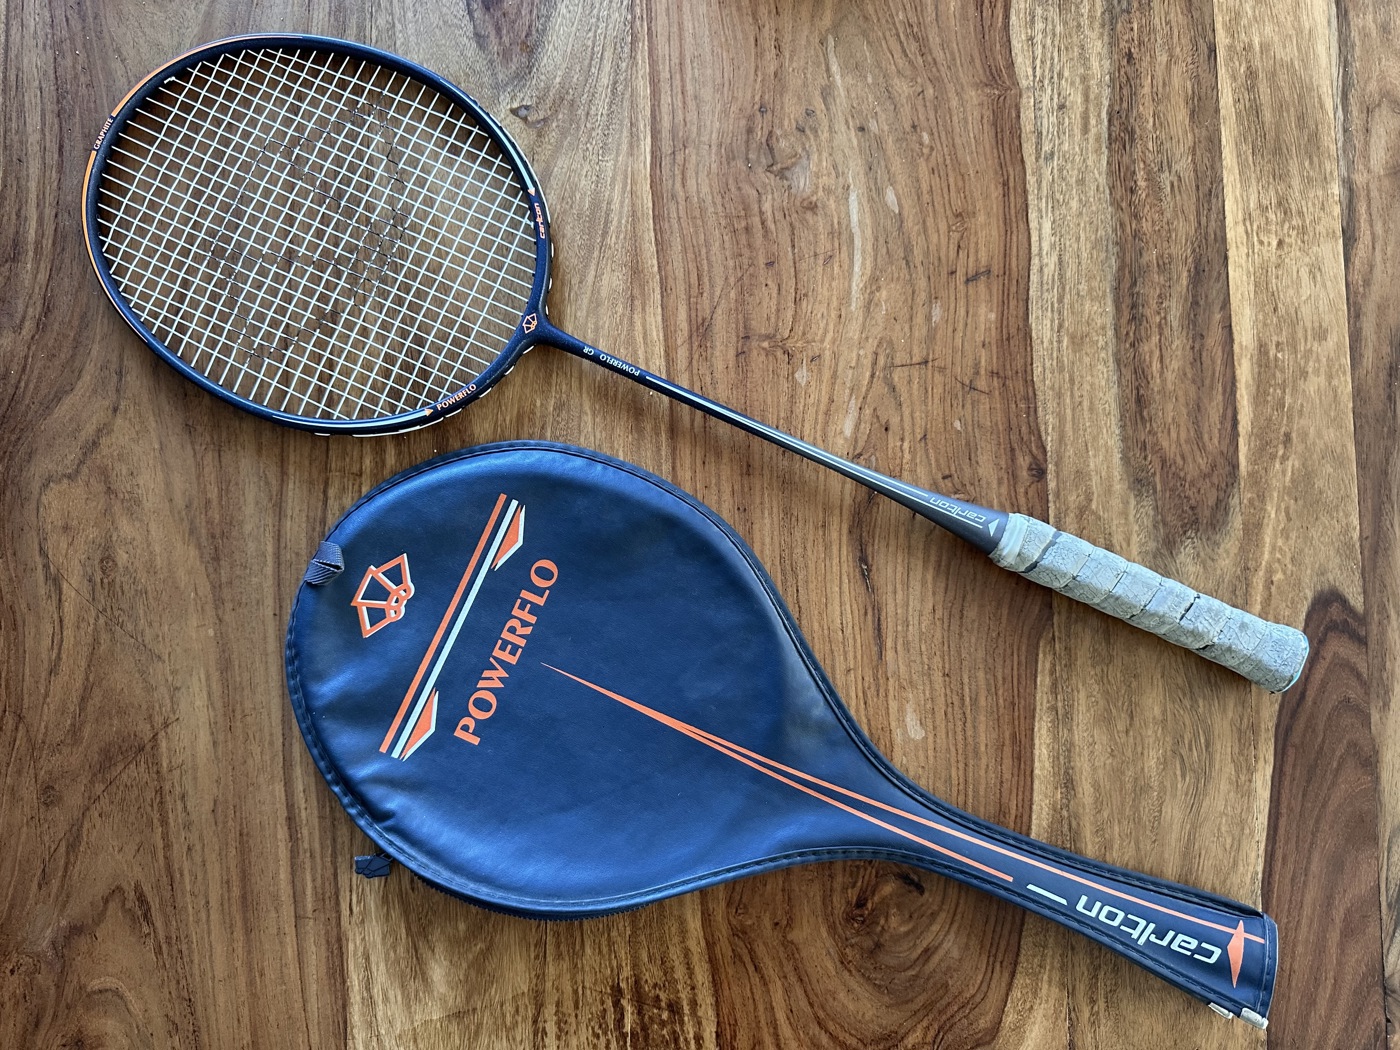 Carlton Badminton pro raquet